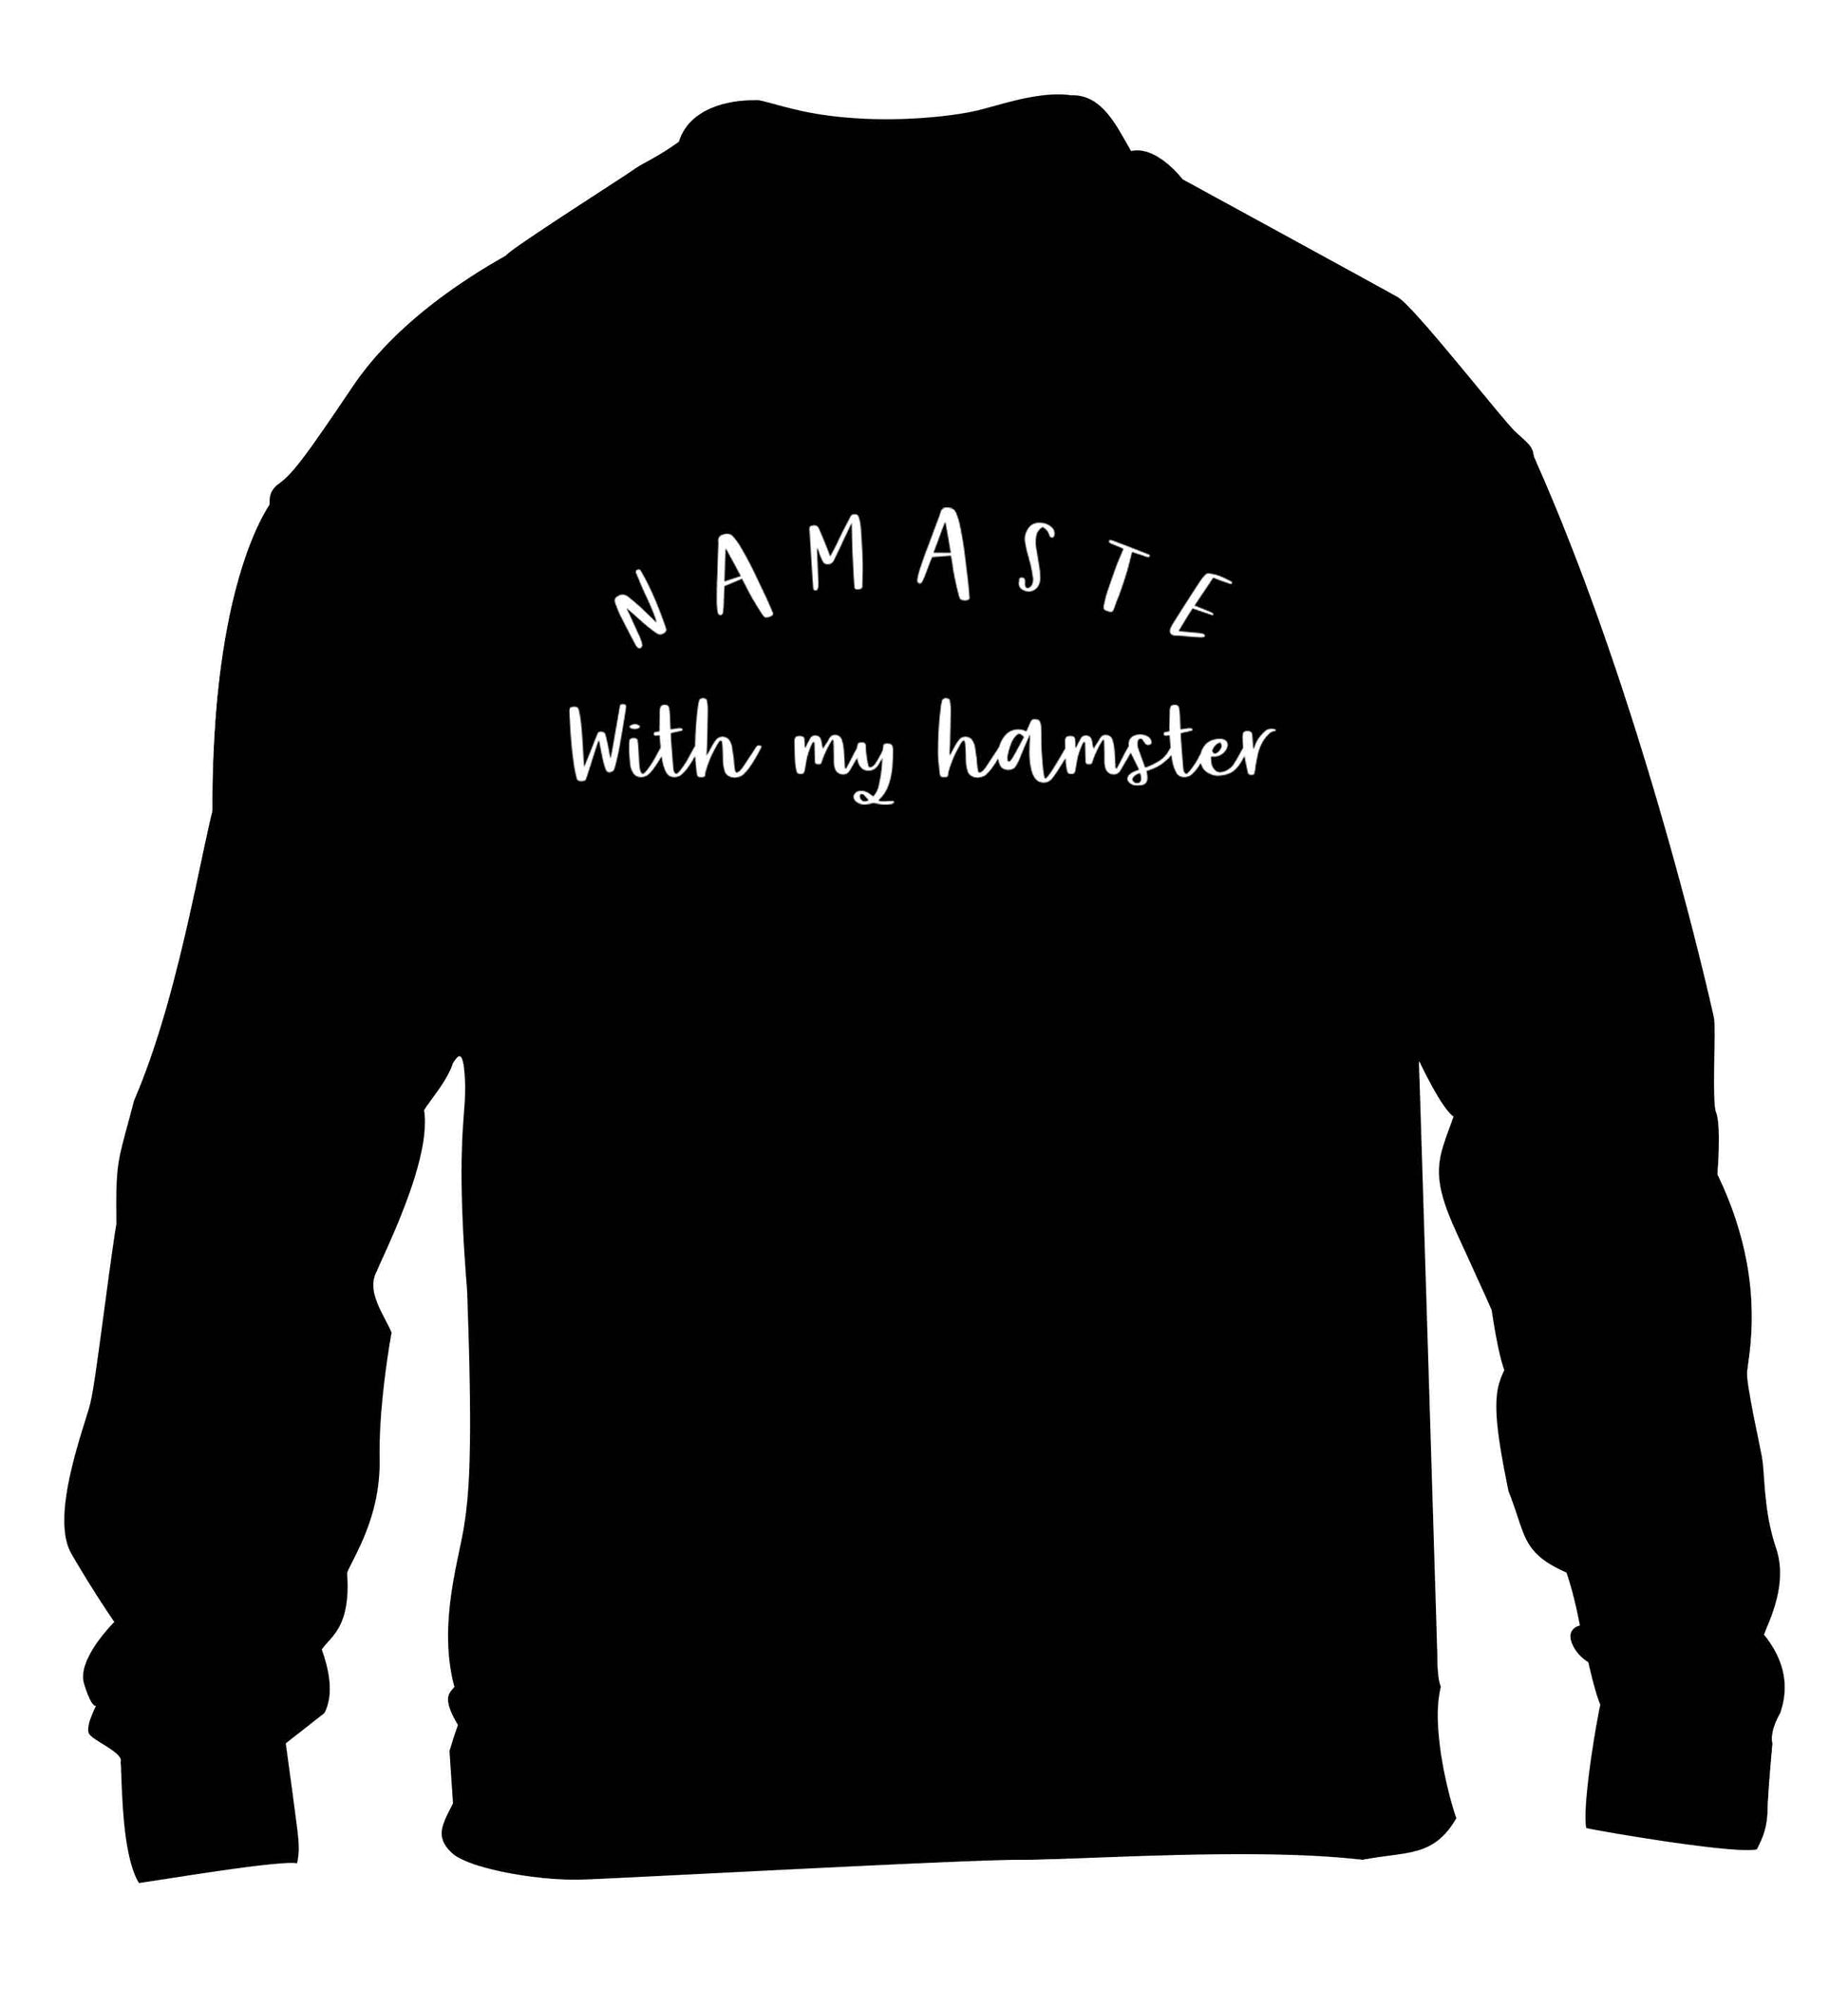 Namaste with my hamster children's black sweater 12-13 Years